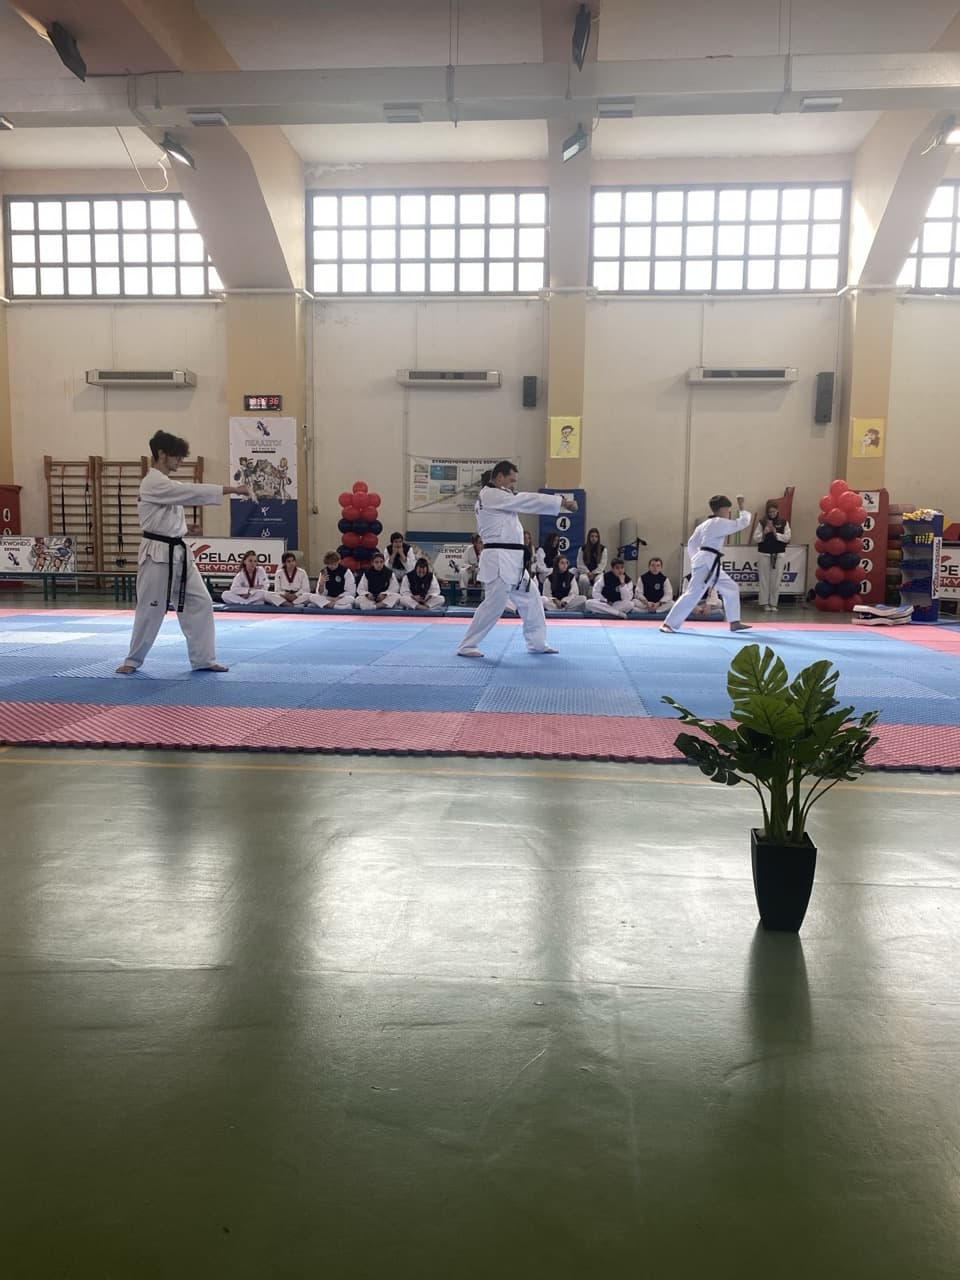 pelasgoi-skyros-taekwondo-skyros-zones-sportshunter-7